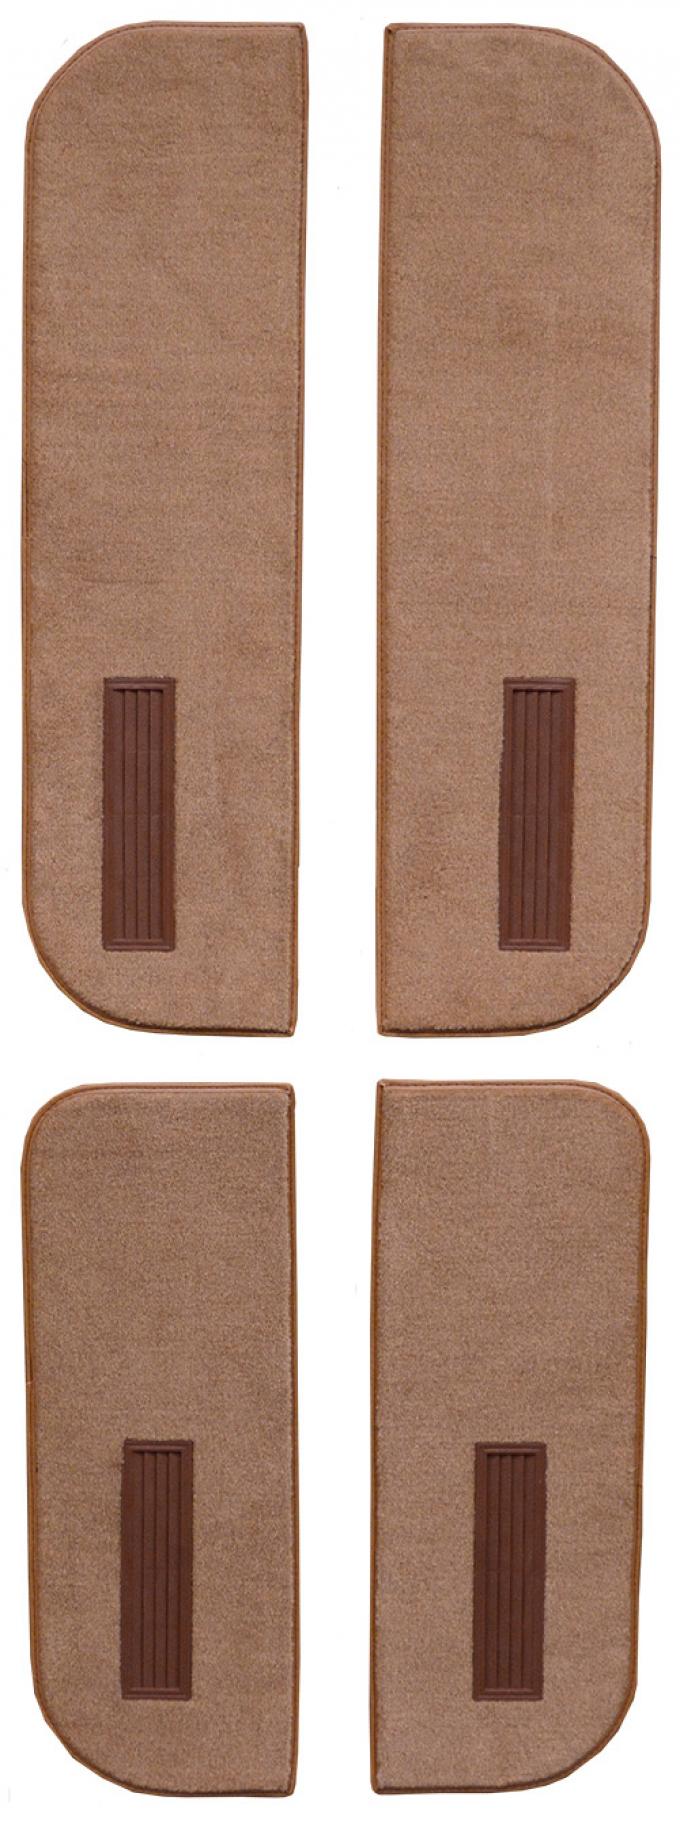 ACC 1974 GMC C15/C1500 Suburban Door Panel Inserts on Cardboard w/Vents 4pc Cutpile Carpet